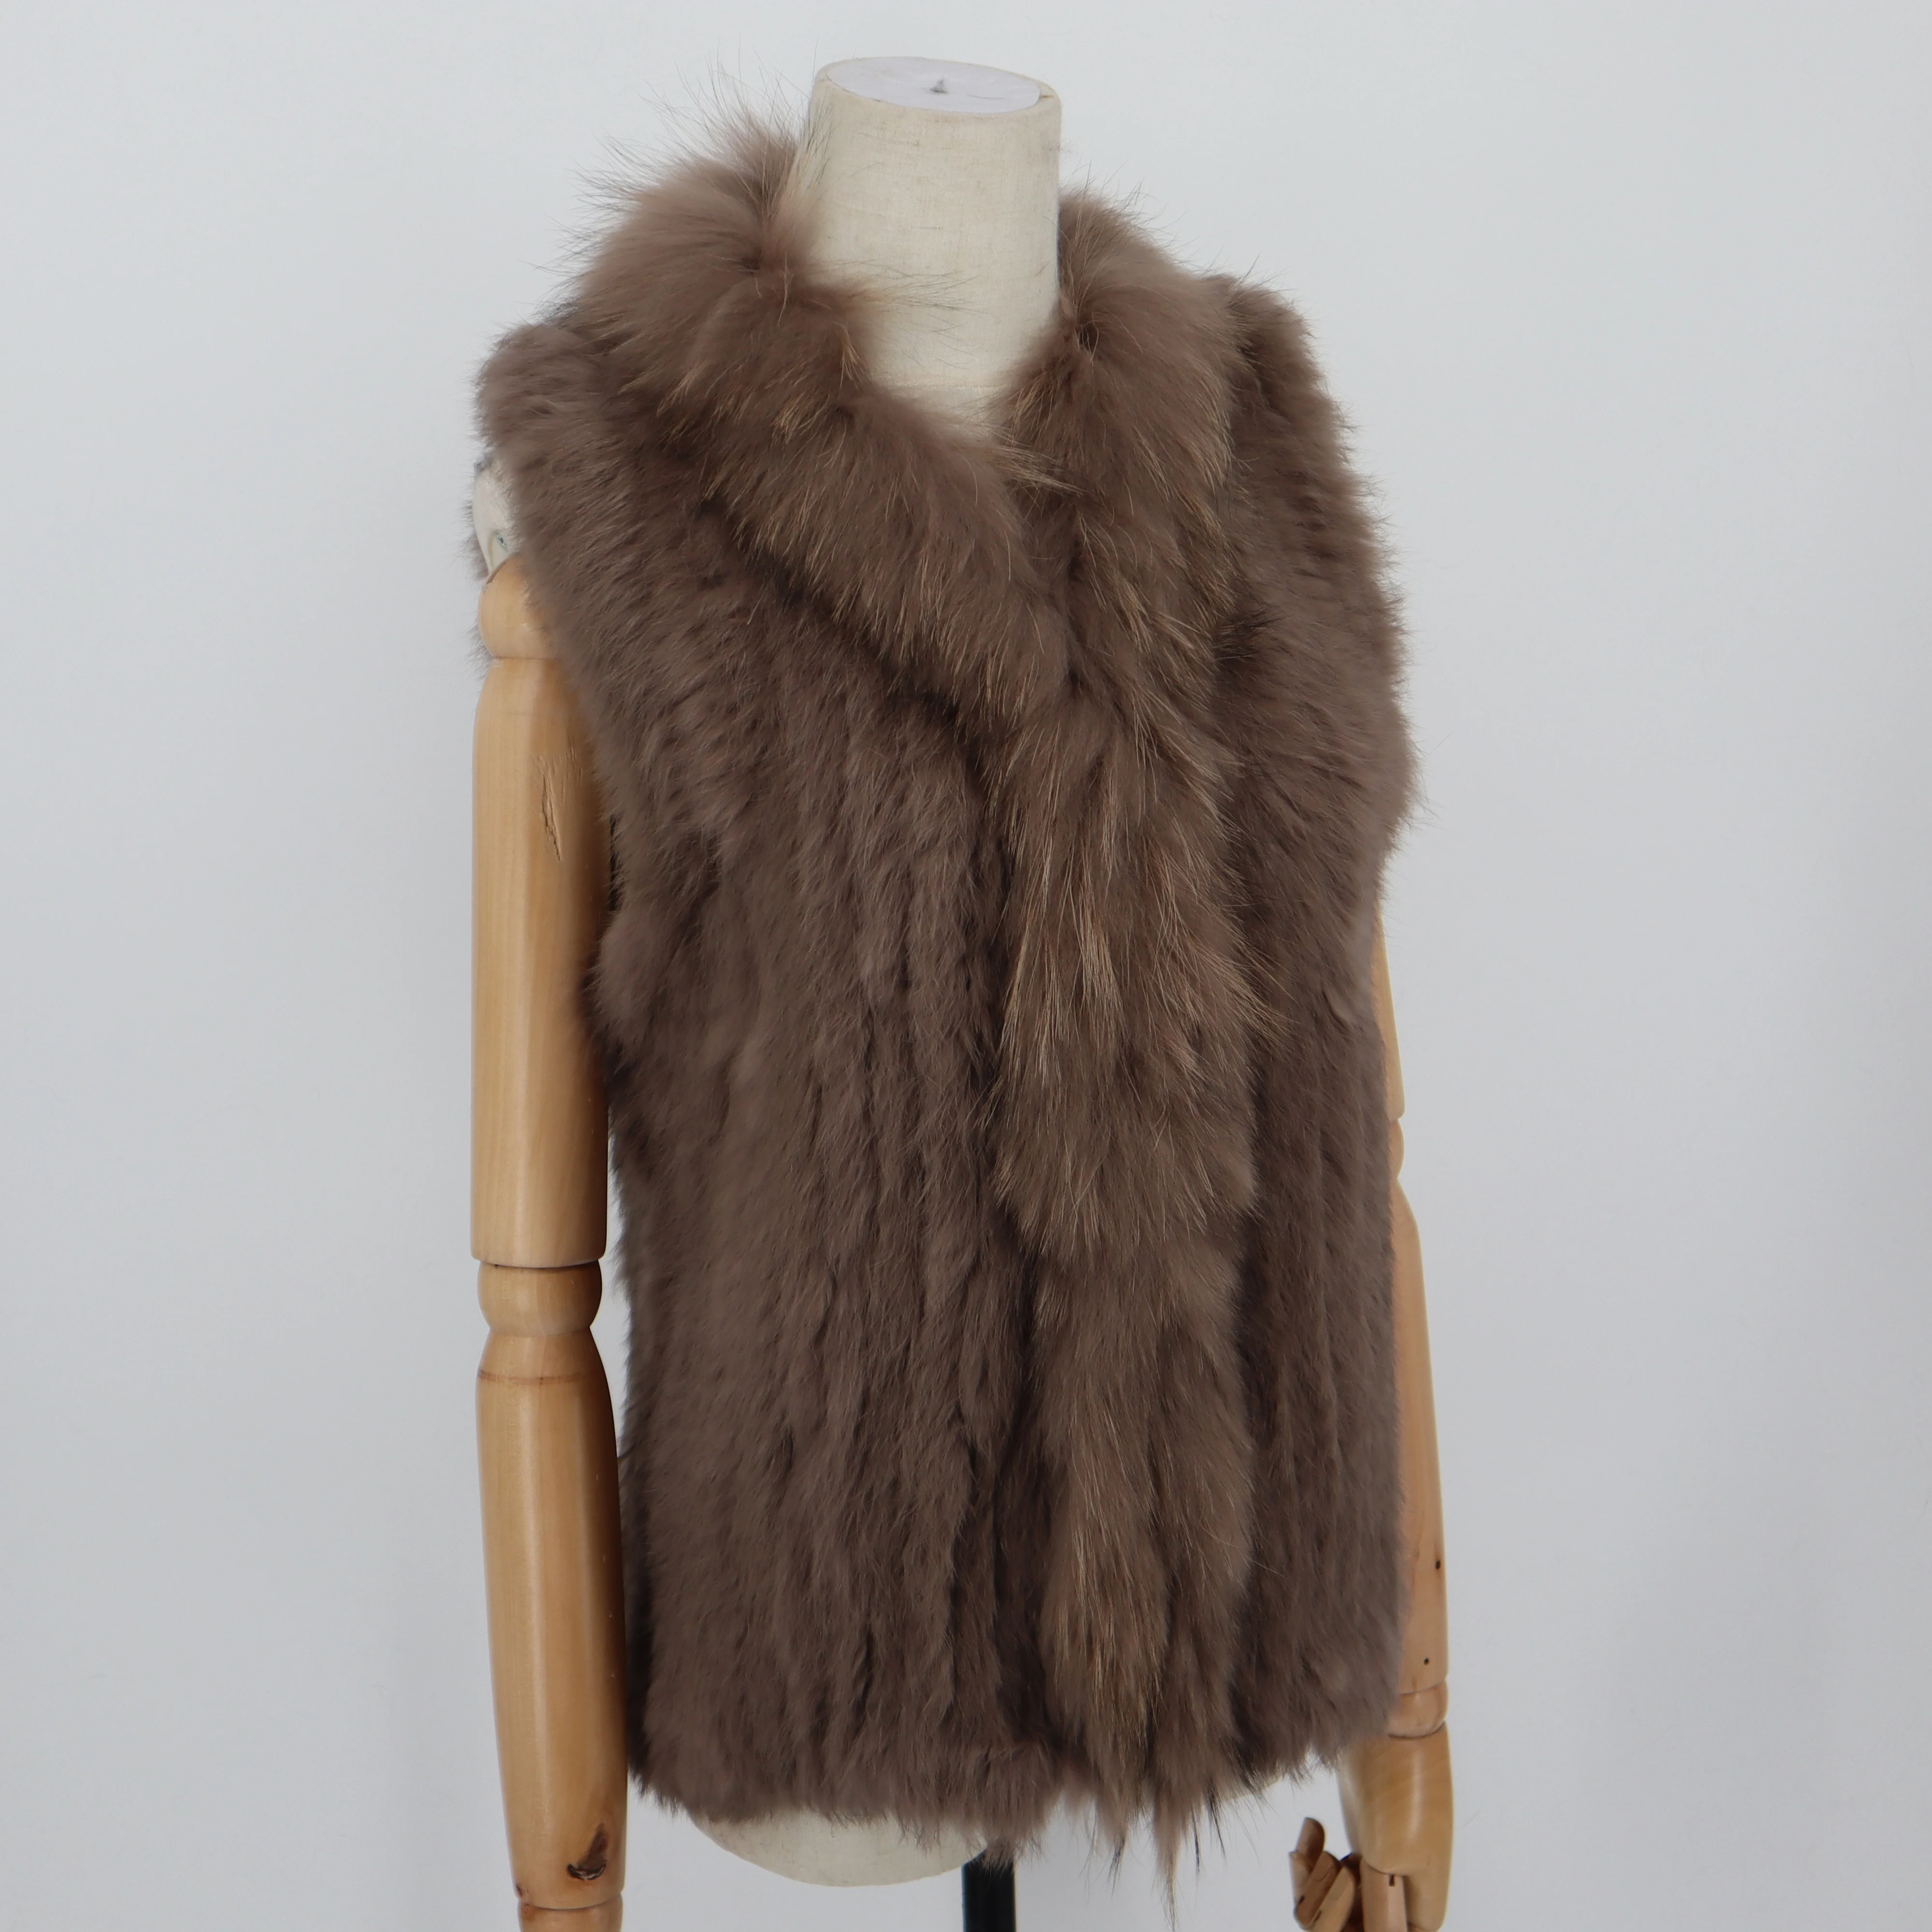 2021 Fashion Real Rabbit Fashion Fur Vest High-end Women Knitted Sleeveless Fur Vests With Natural Raccoon Fur Jacket Women Coat black parka Coats & Jackets